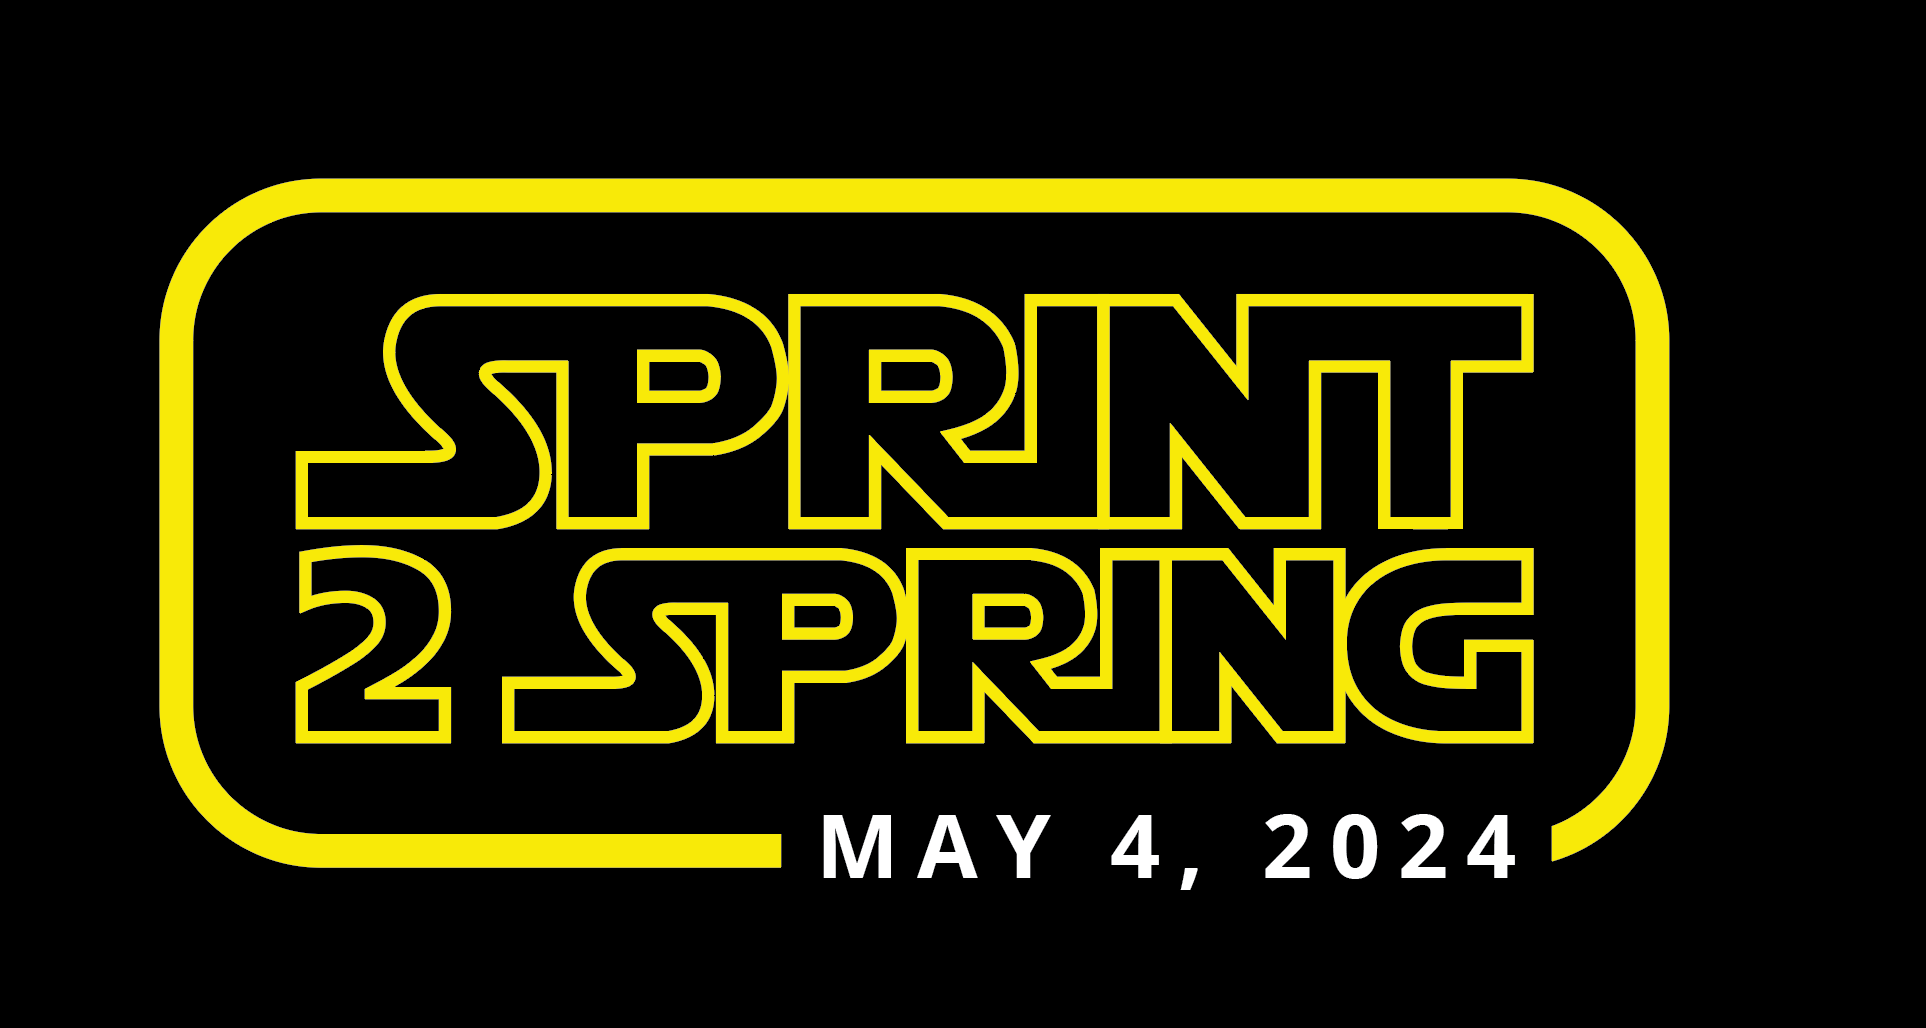 Hanover Township Sprint 2 Spring 5K 2024